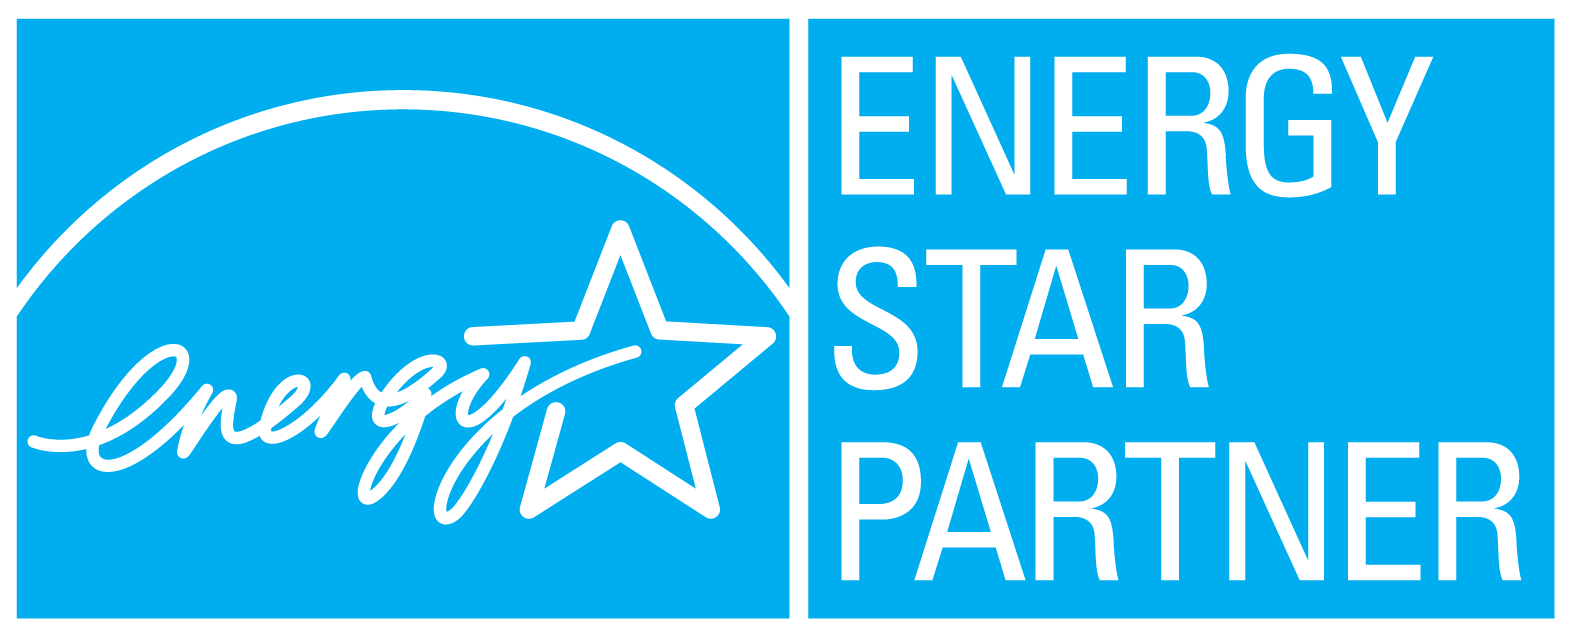 Energystar-PAR-partner_h_c